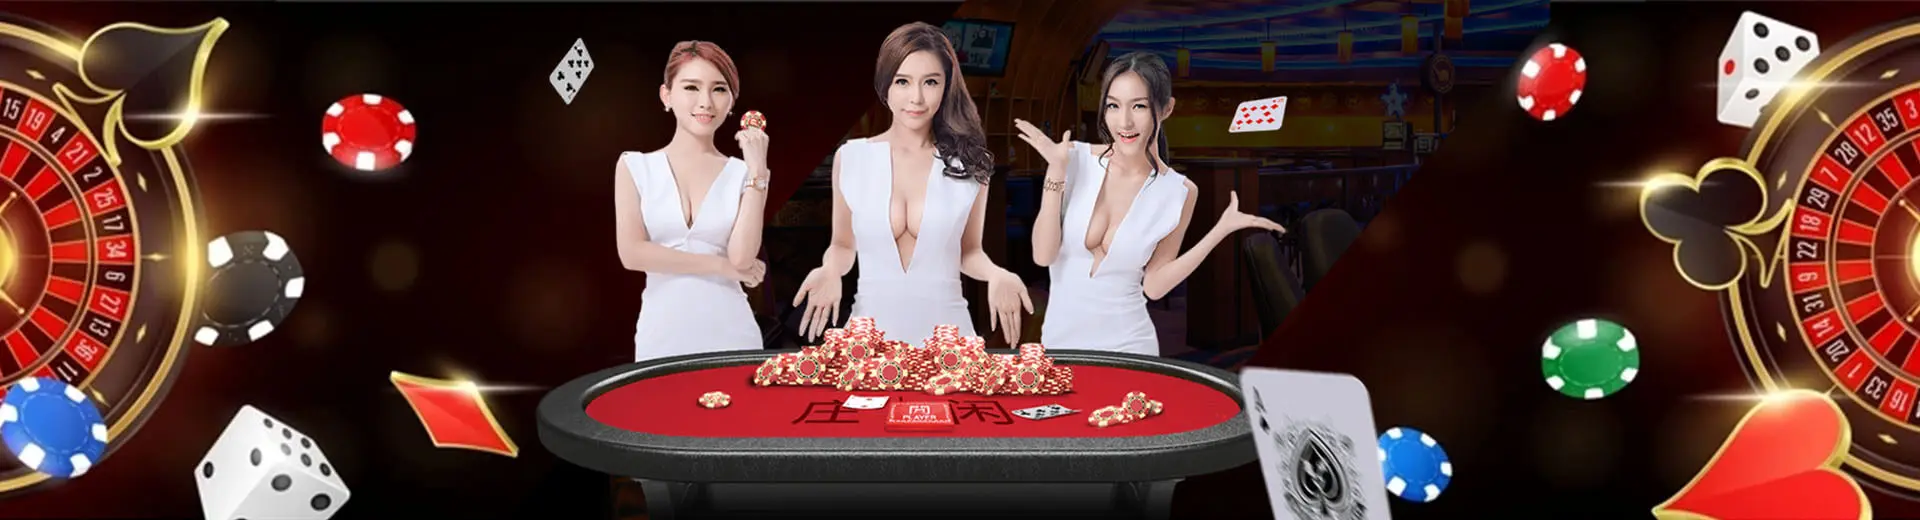 Vietnam Poker Tournament banner